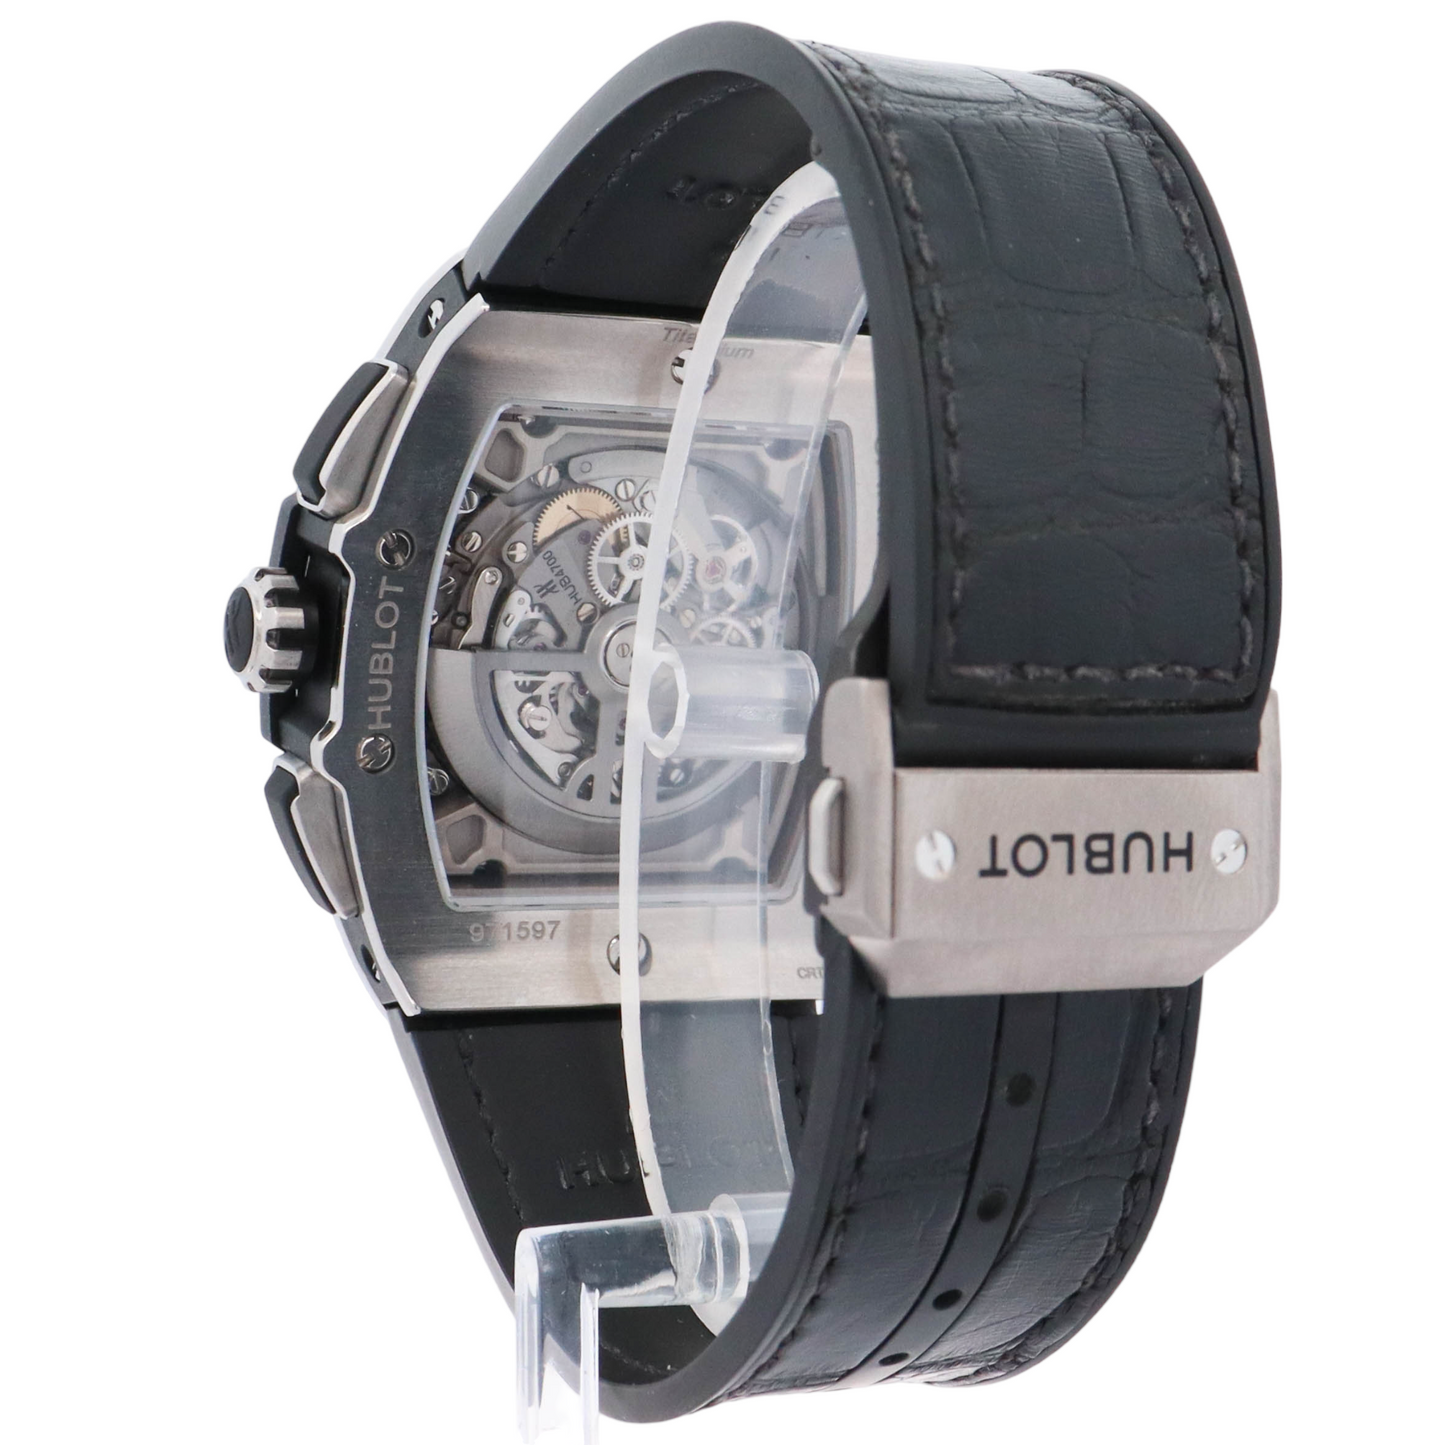 Hublot Spirit of Big Bang Stainless Steel 45mm Skeleton Dial Watch Ref# 601.NM.0173.LR - Happy Jewelers Fine Jewelry Lifetime Warranty